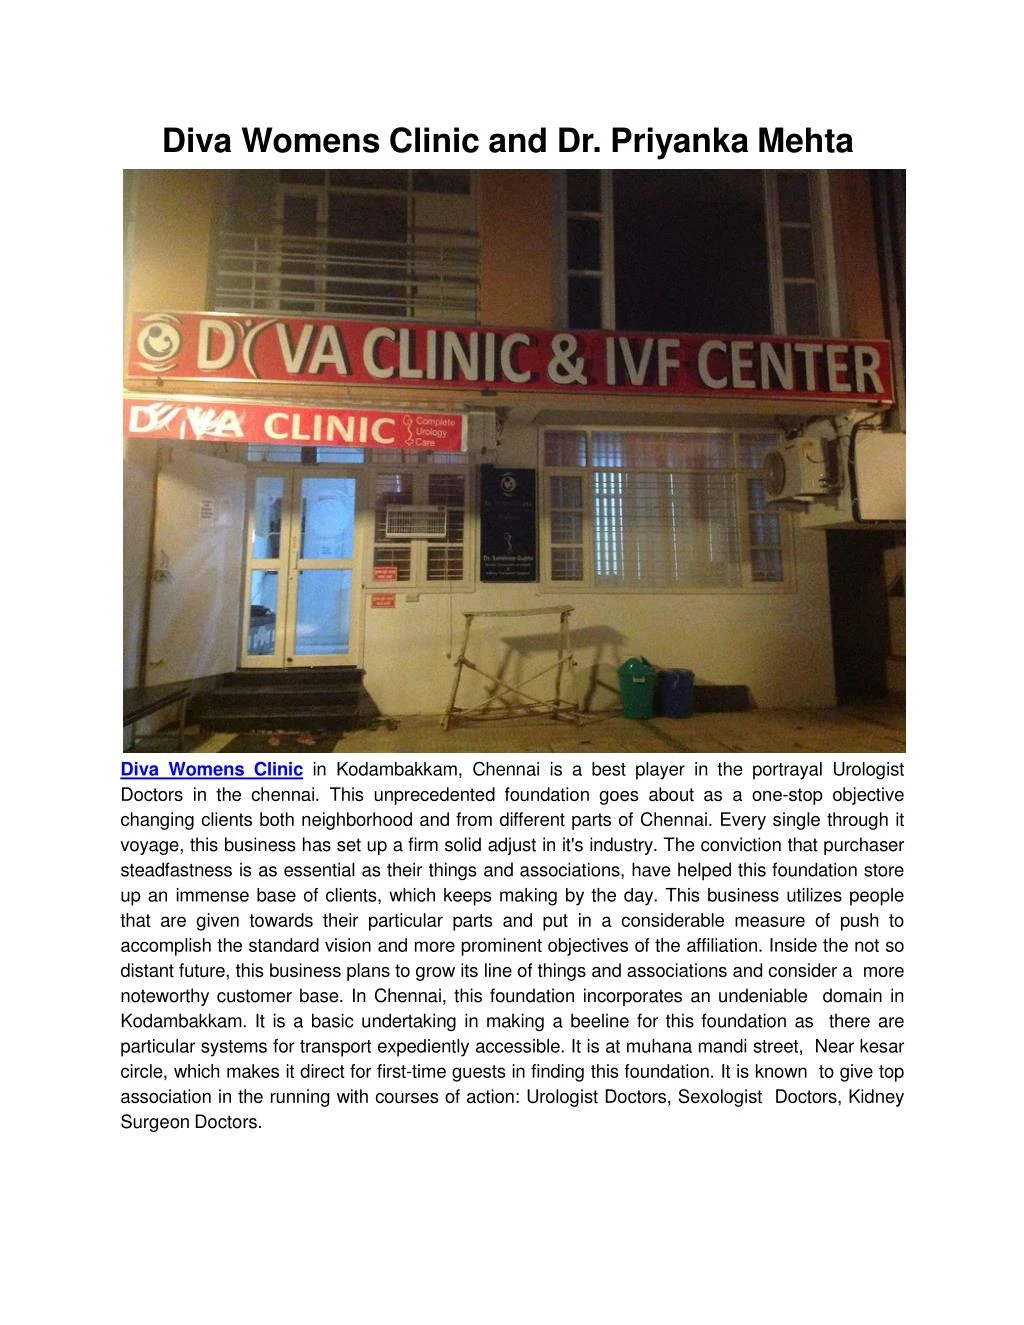 diva womens clinic and dr priyanka mehta